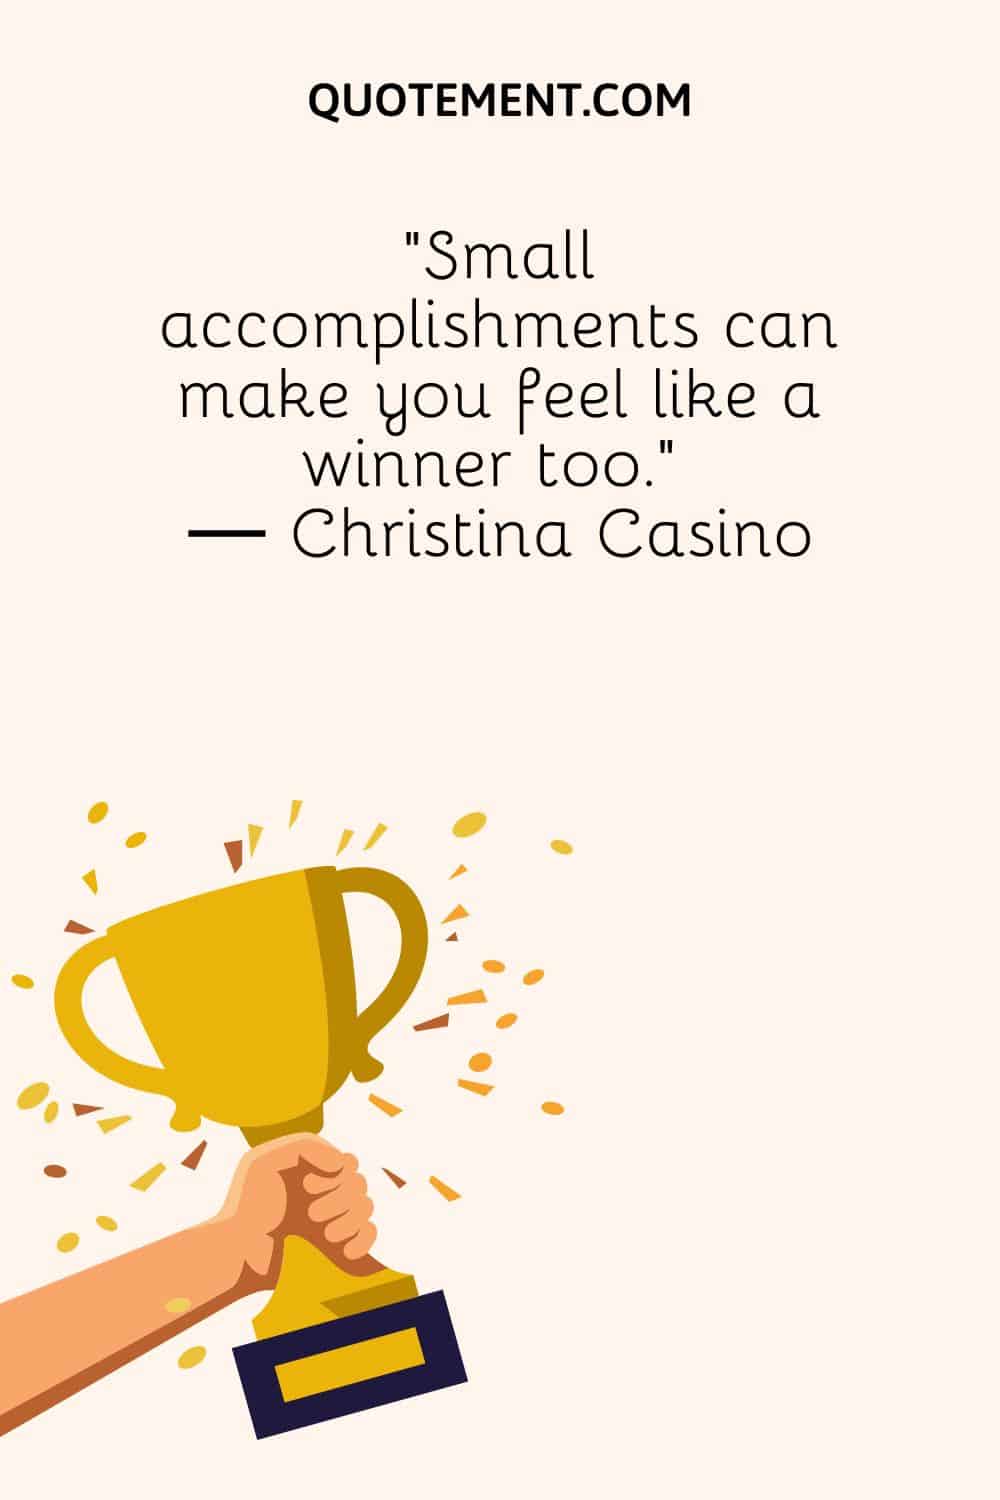 “Small accomplishments can make you feel like a winner too.” ― Christina Casino